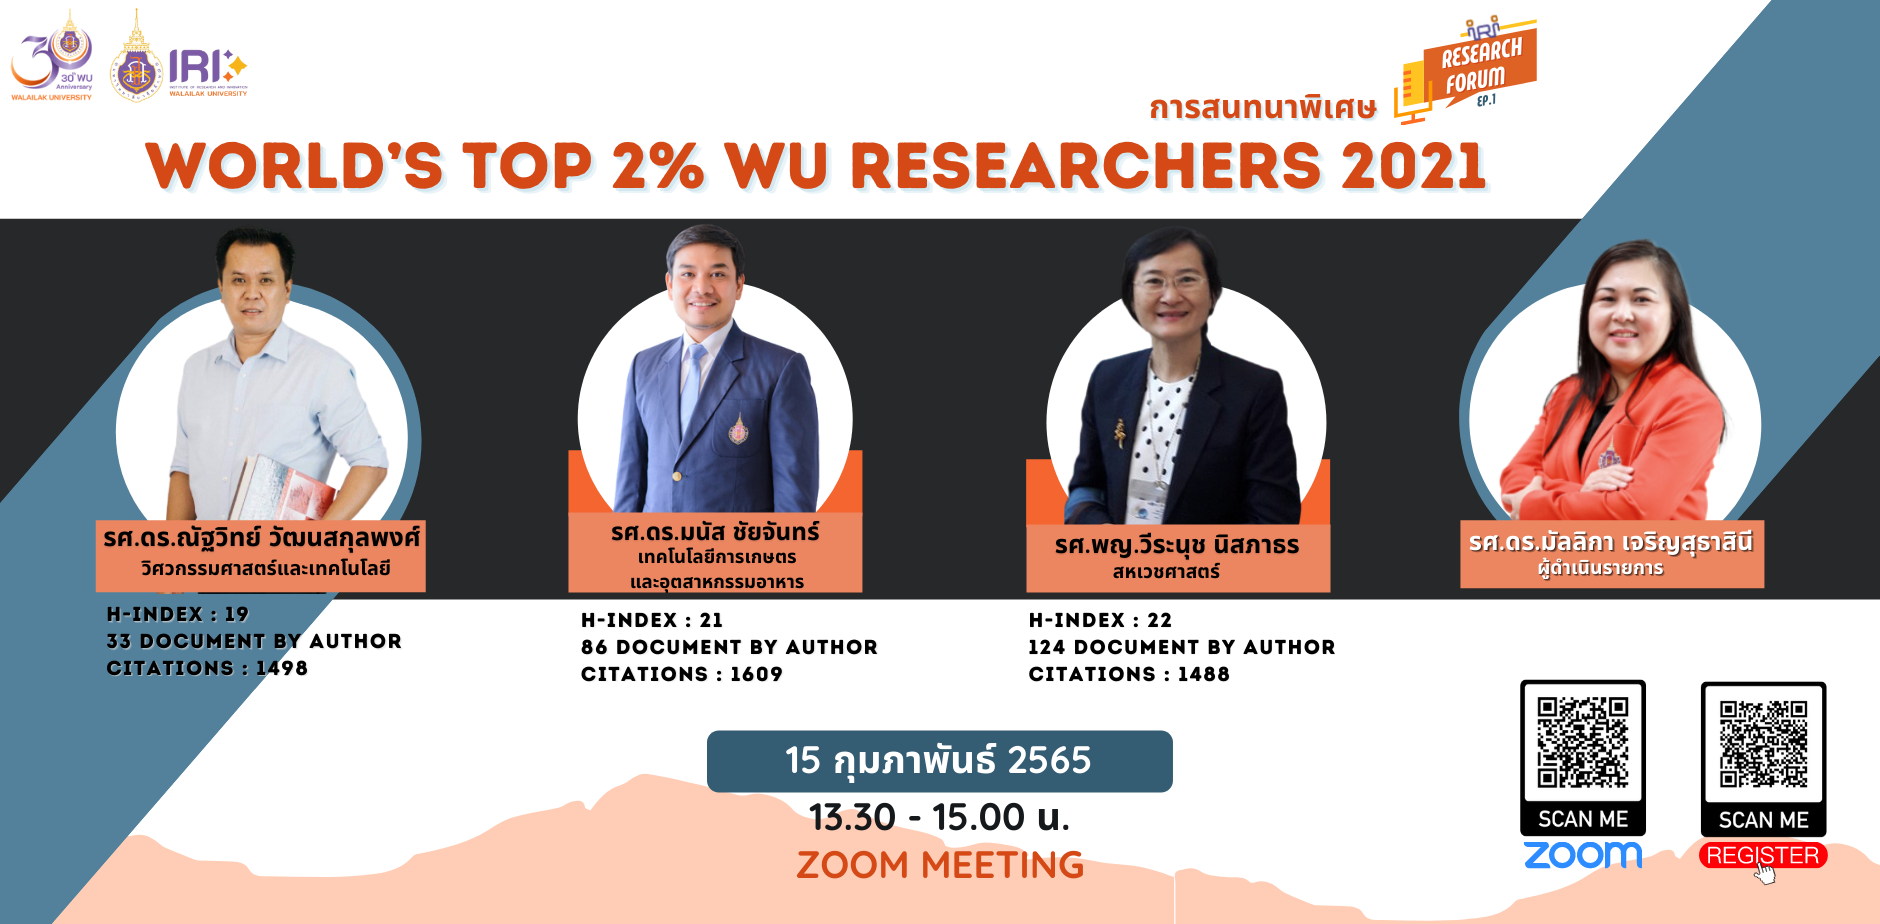 World’s top 2% WU researchers 2021